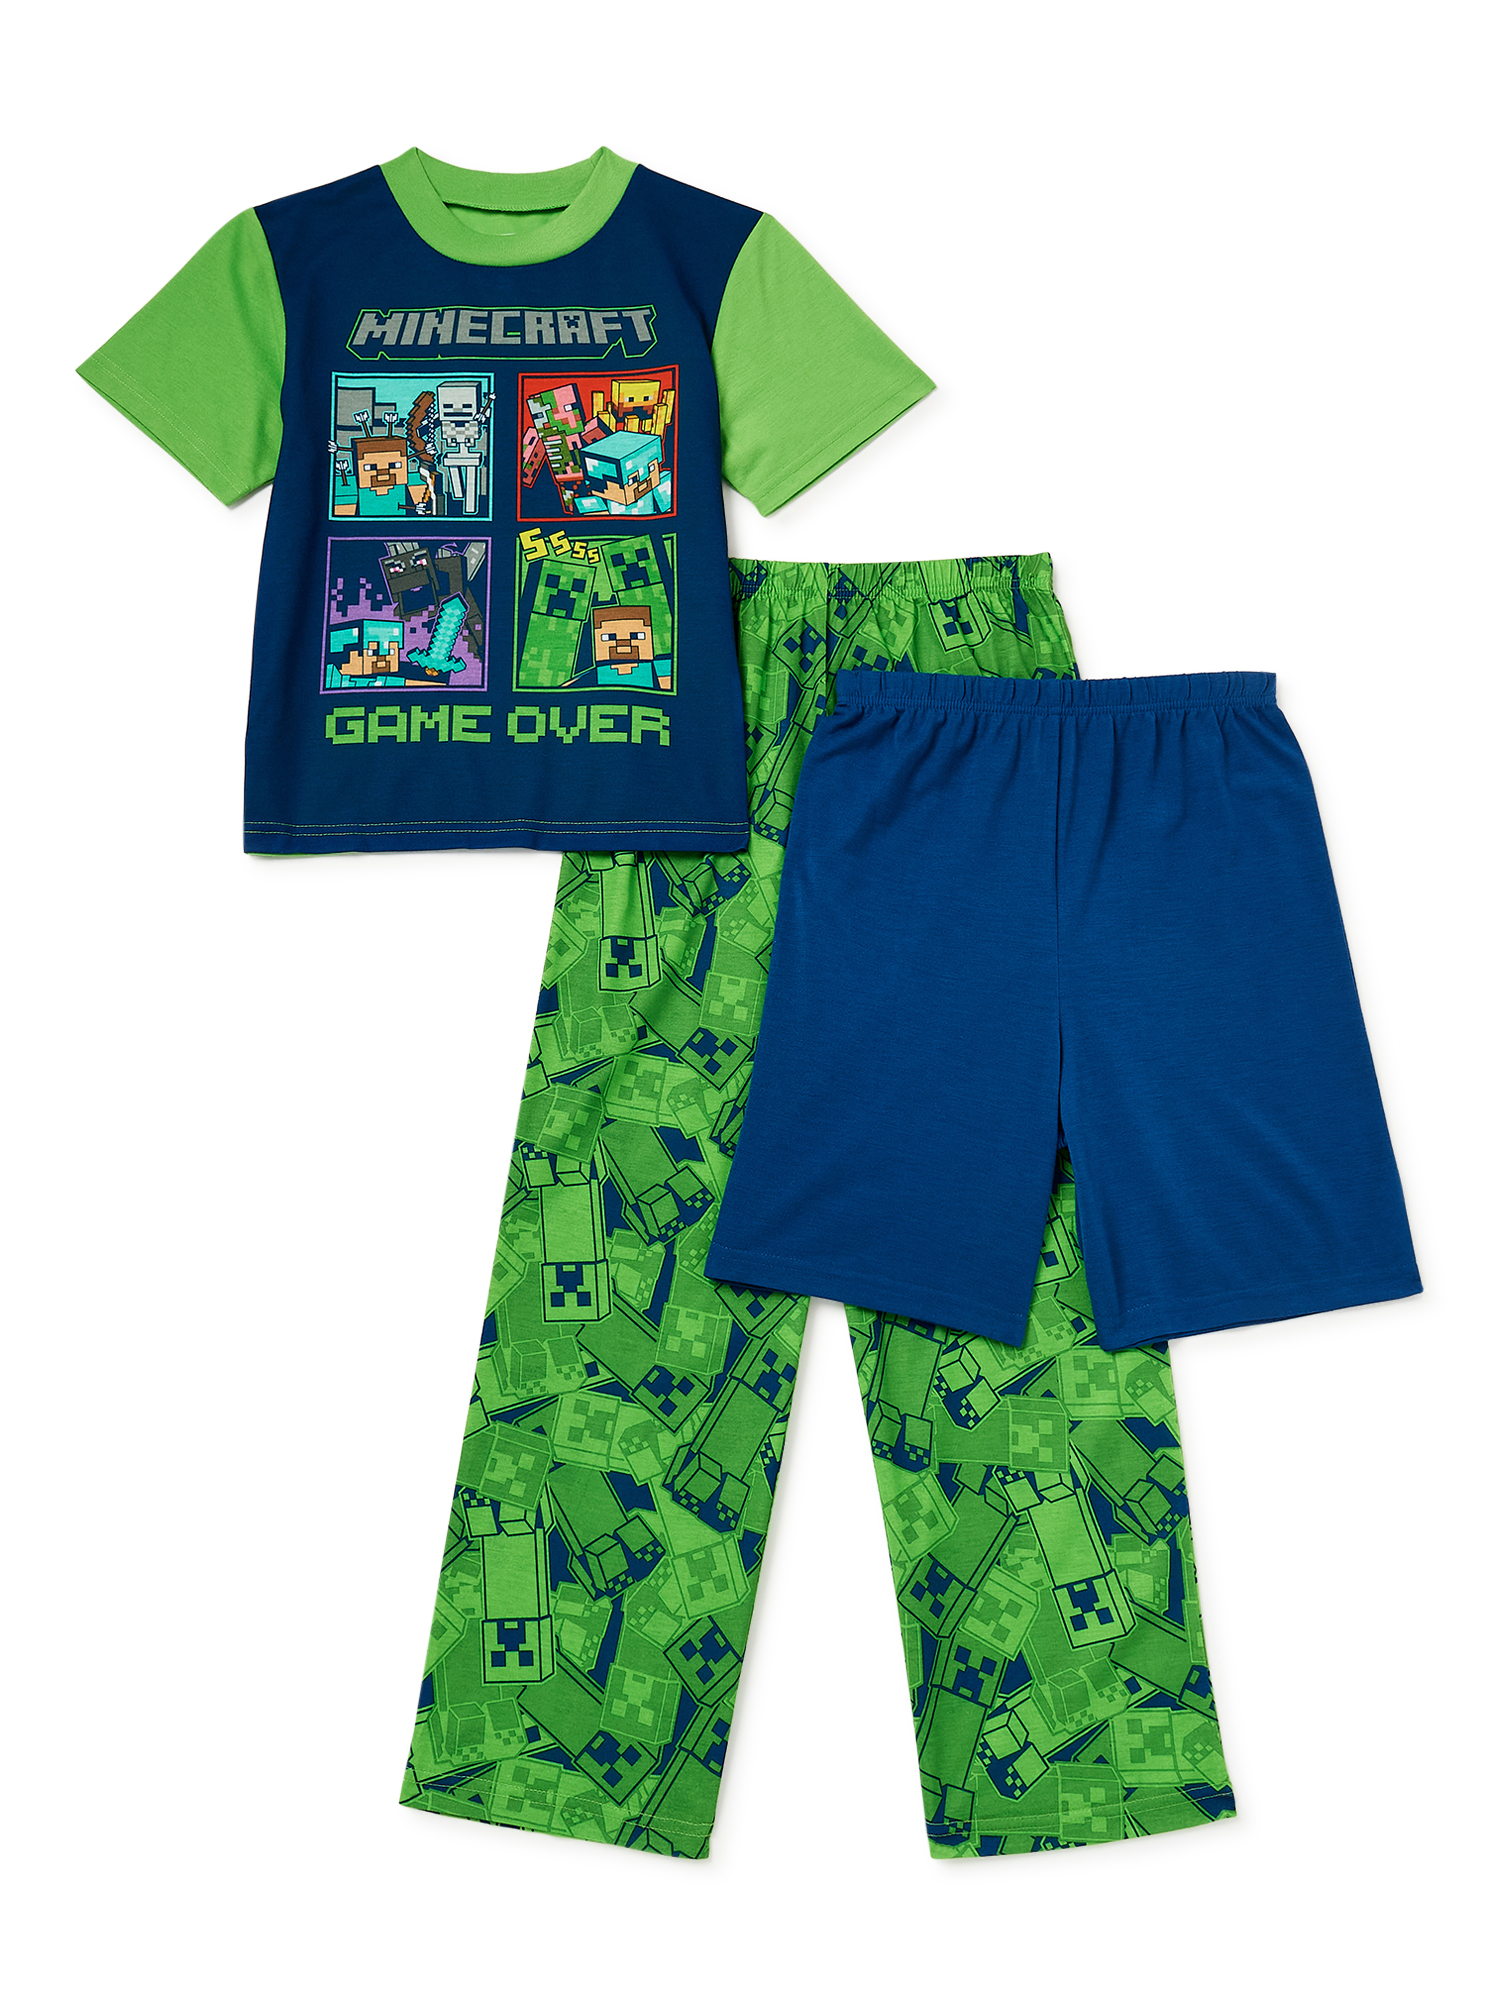 Minecraft Boys Short Sleeve Top, Pants and Shorts, 3-Piece Pajama Set, Sizes 6-12 - image 1 of 3